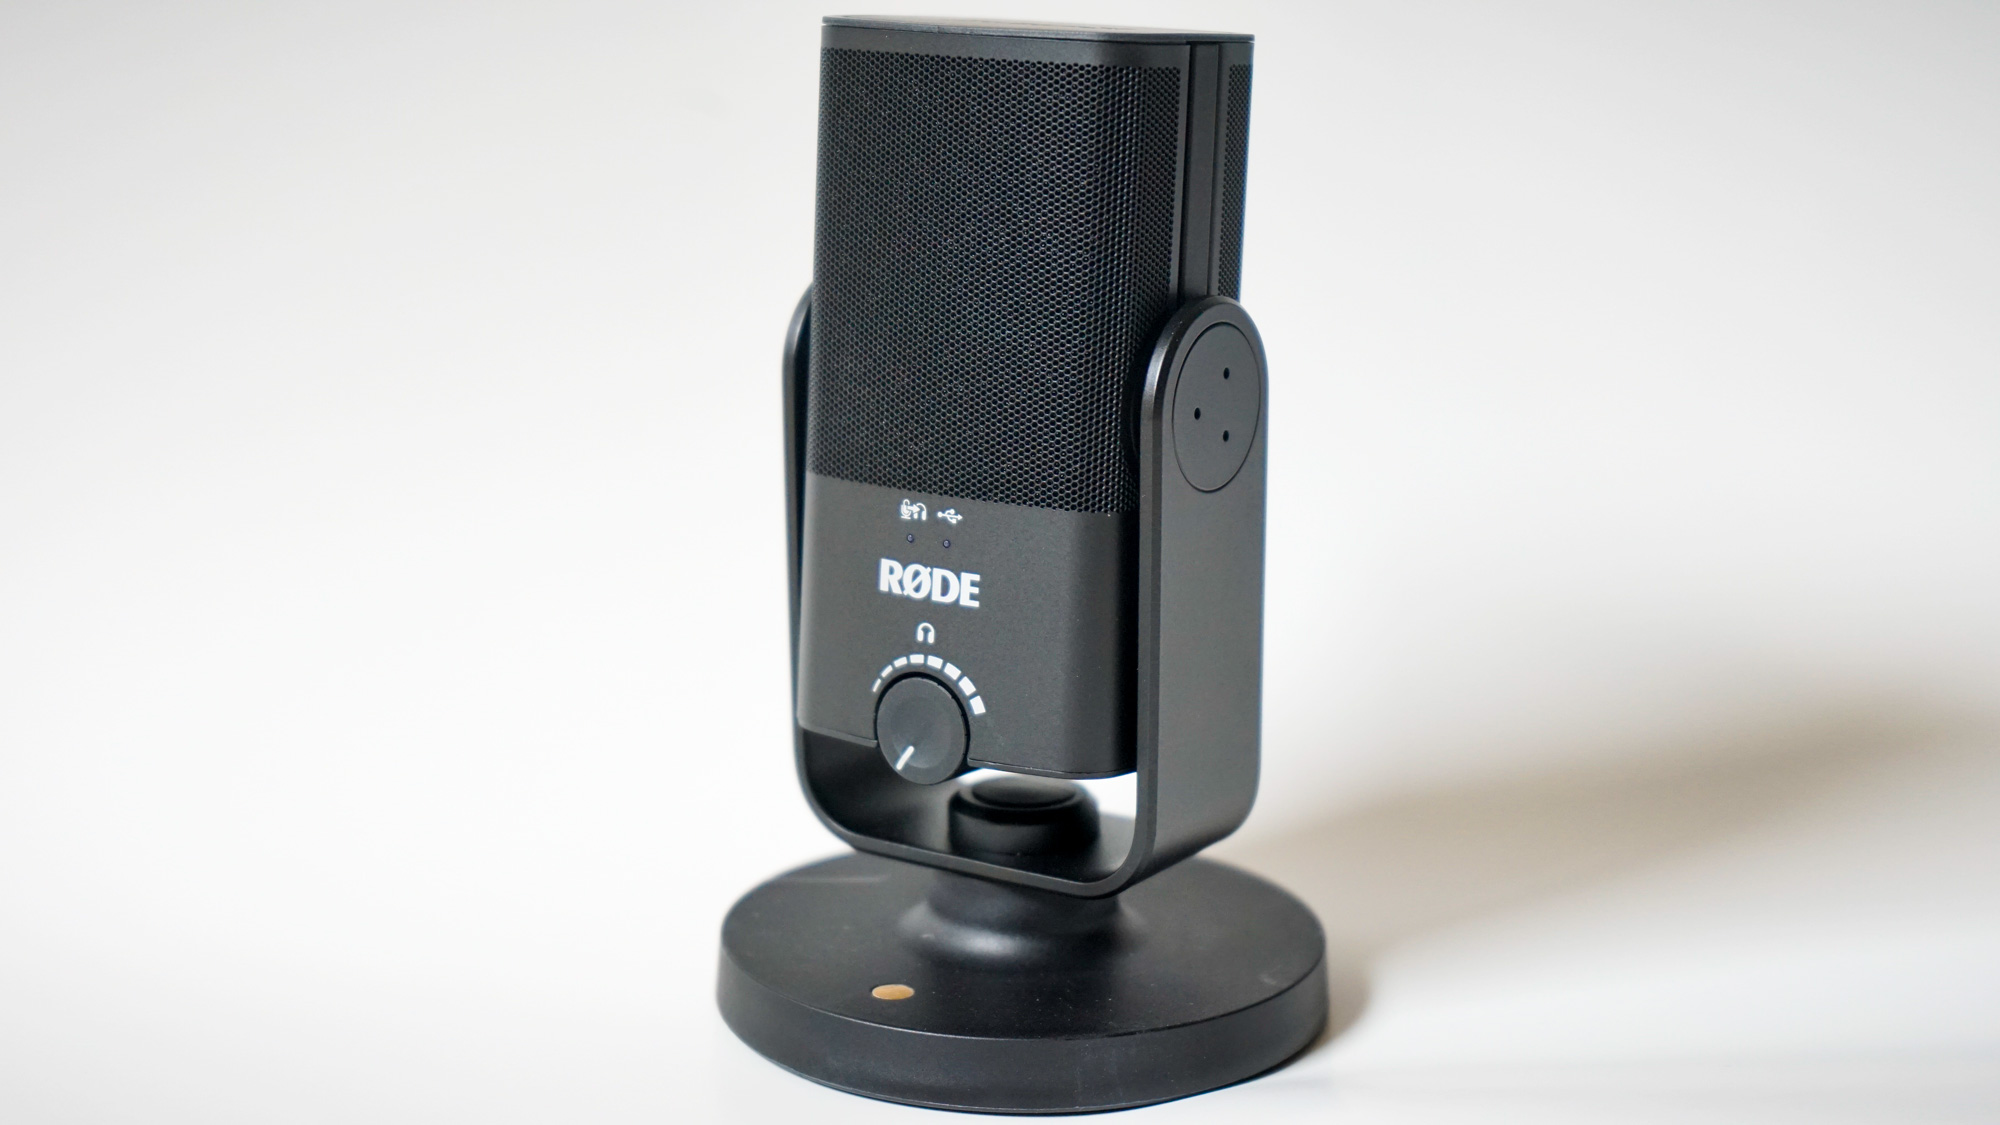 Rode s new mini USB microphone is here to take on the Yeti Nano